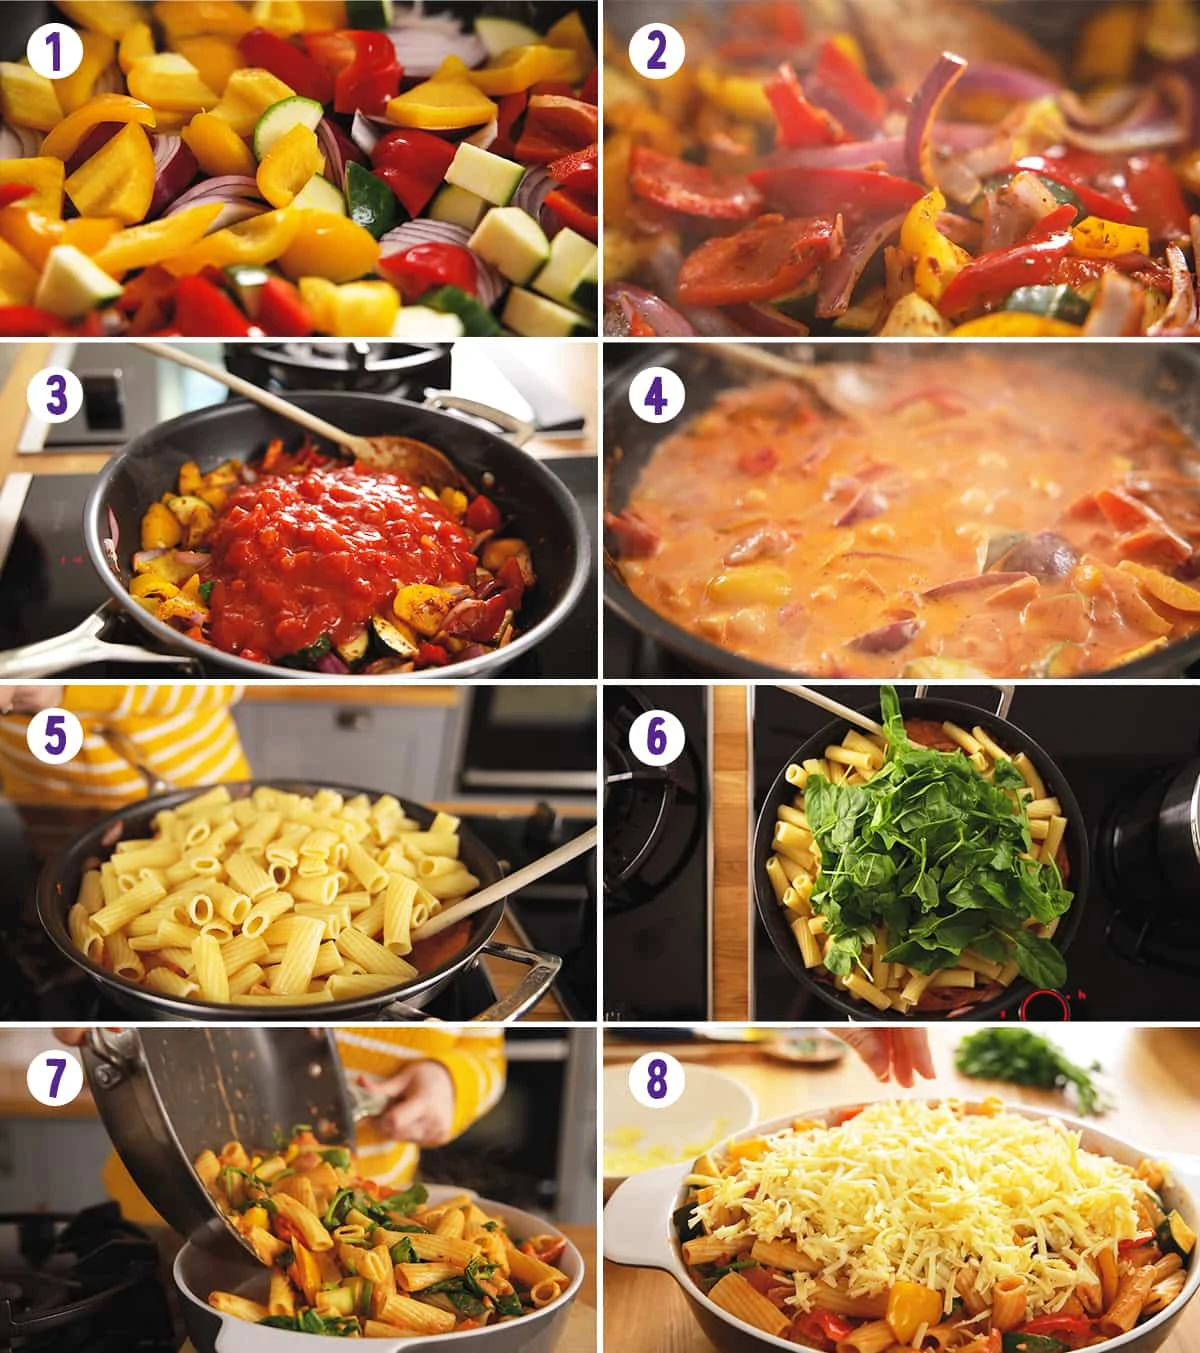 8 image collage showing steps for making vegetable pasta bake